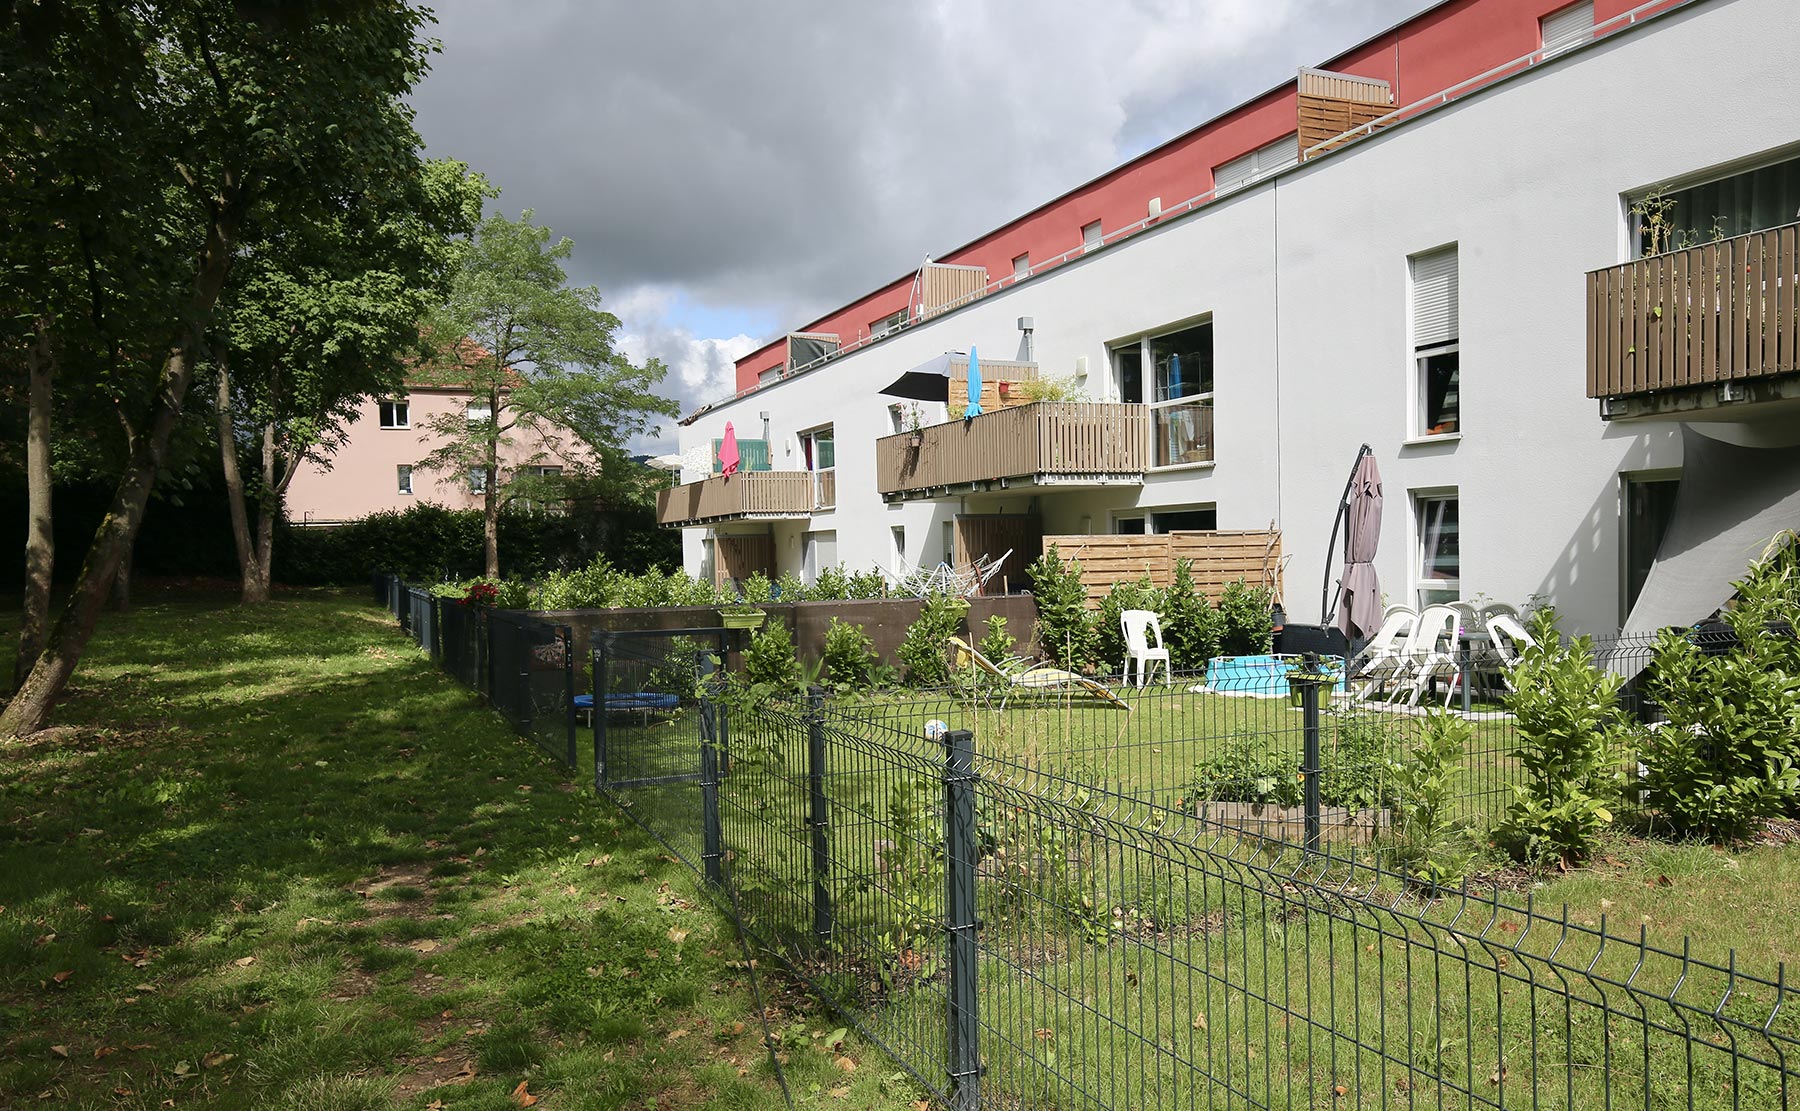  - La Garance - 21 Logements à Wintzenheim-Logelbach / Logelbach